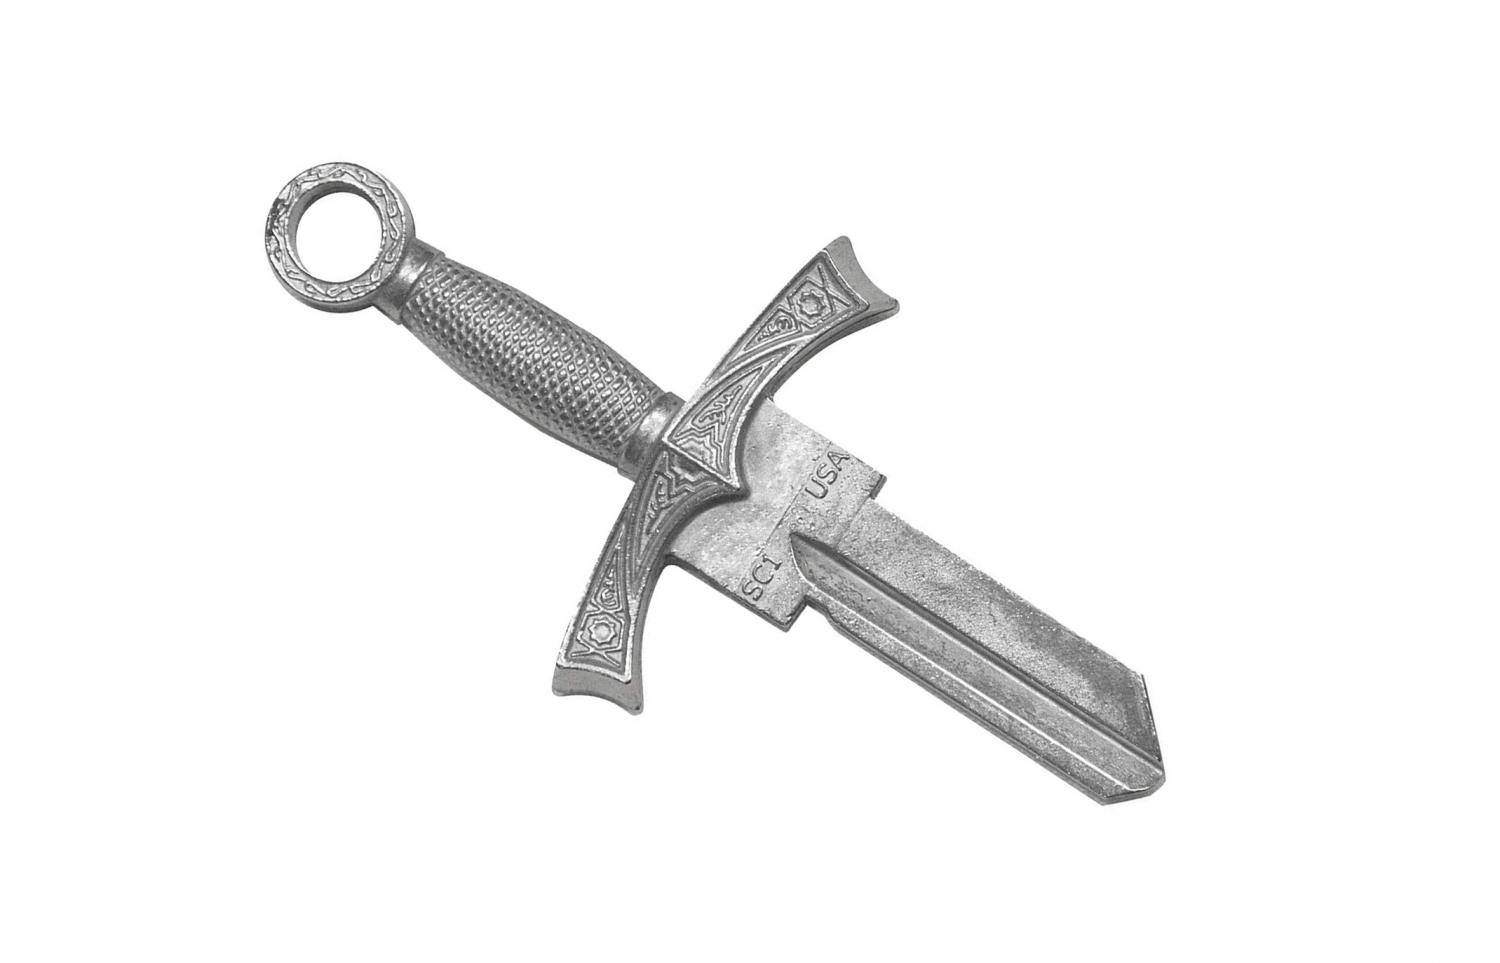 Sword Key - Sword Shaped Key Blank